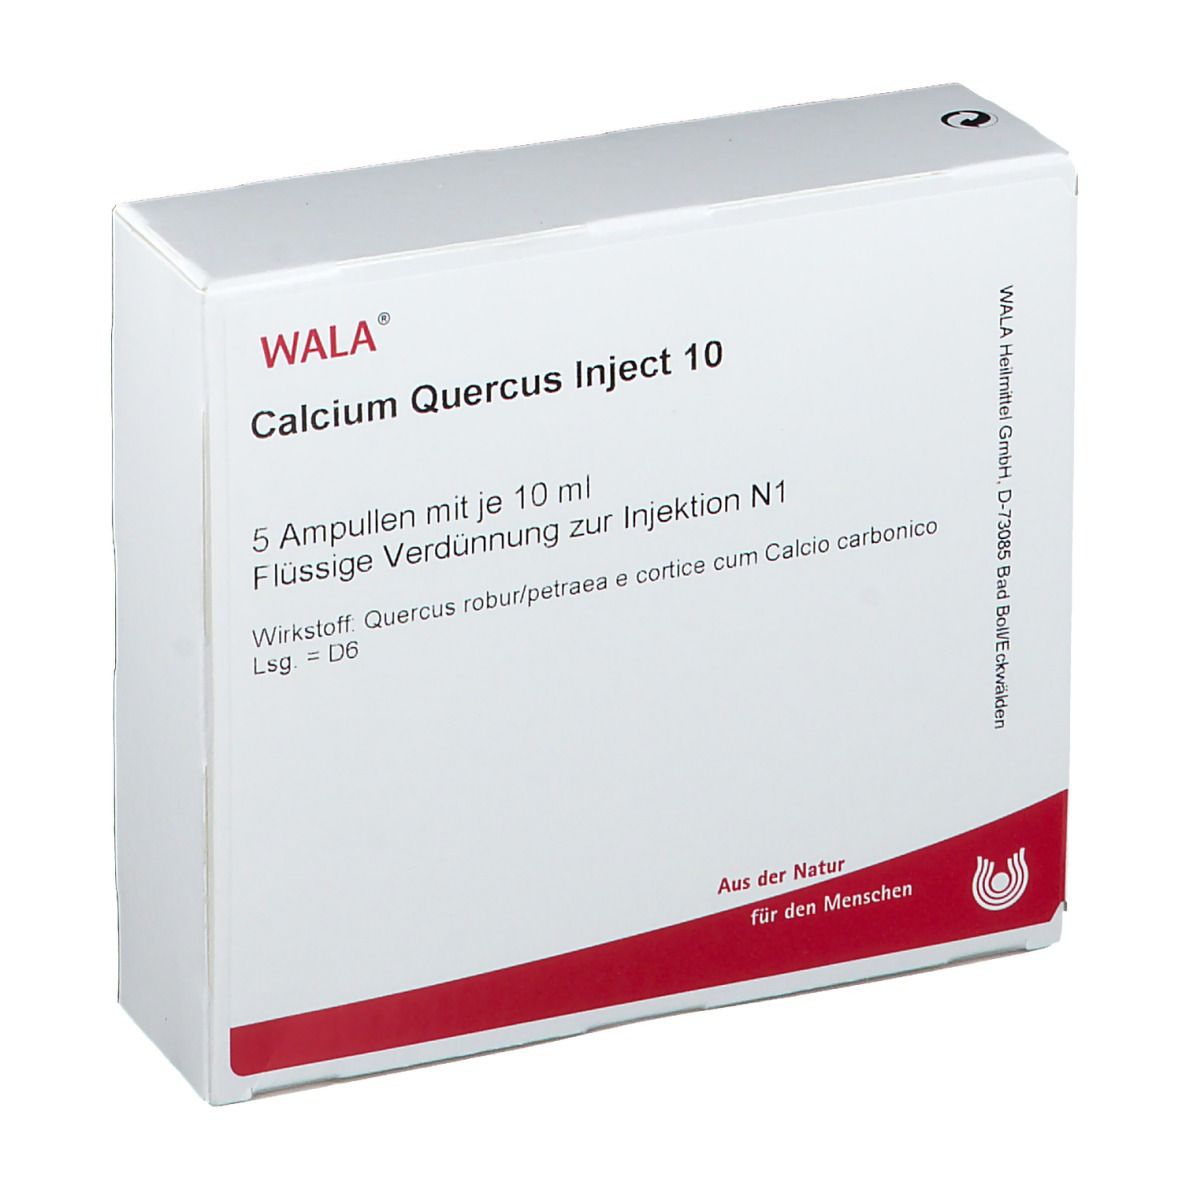 Wala® Calcium Quercus Inject 10 Ampullen